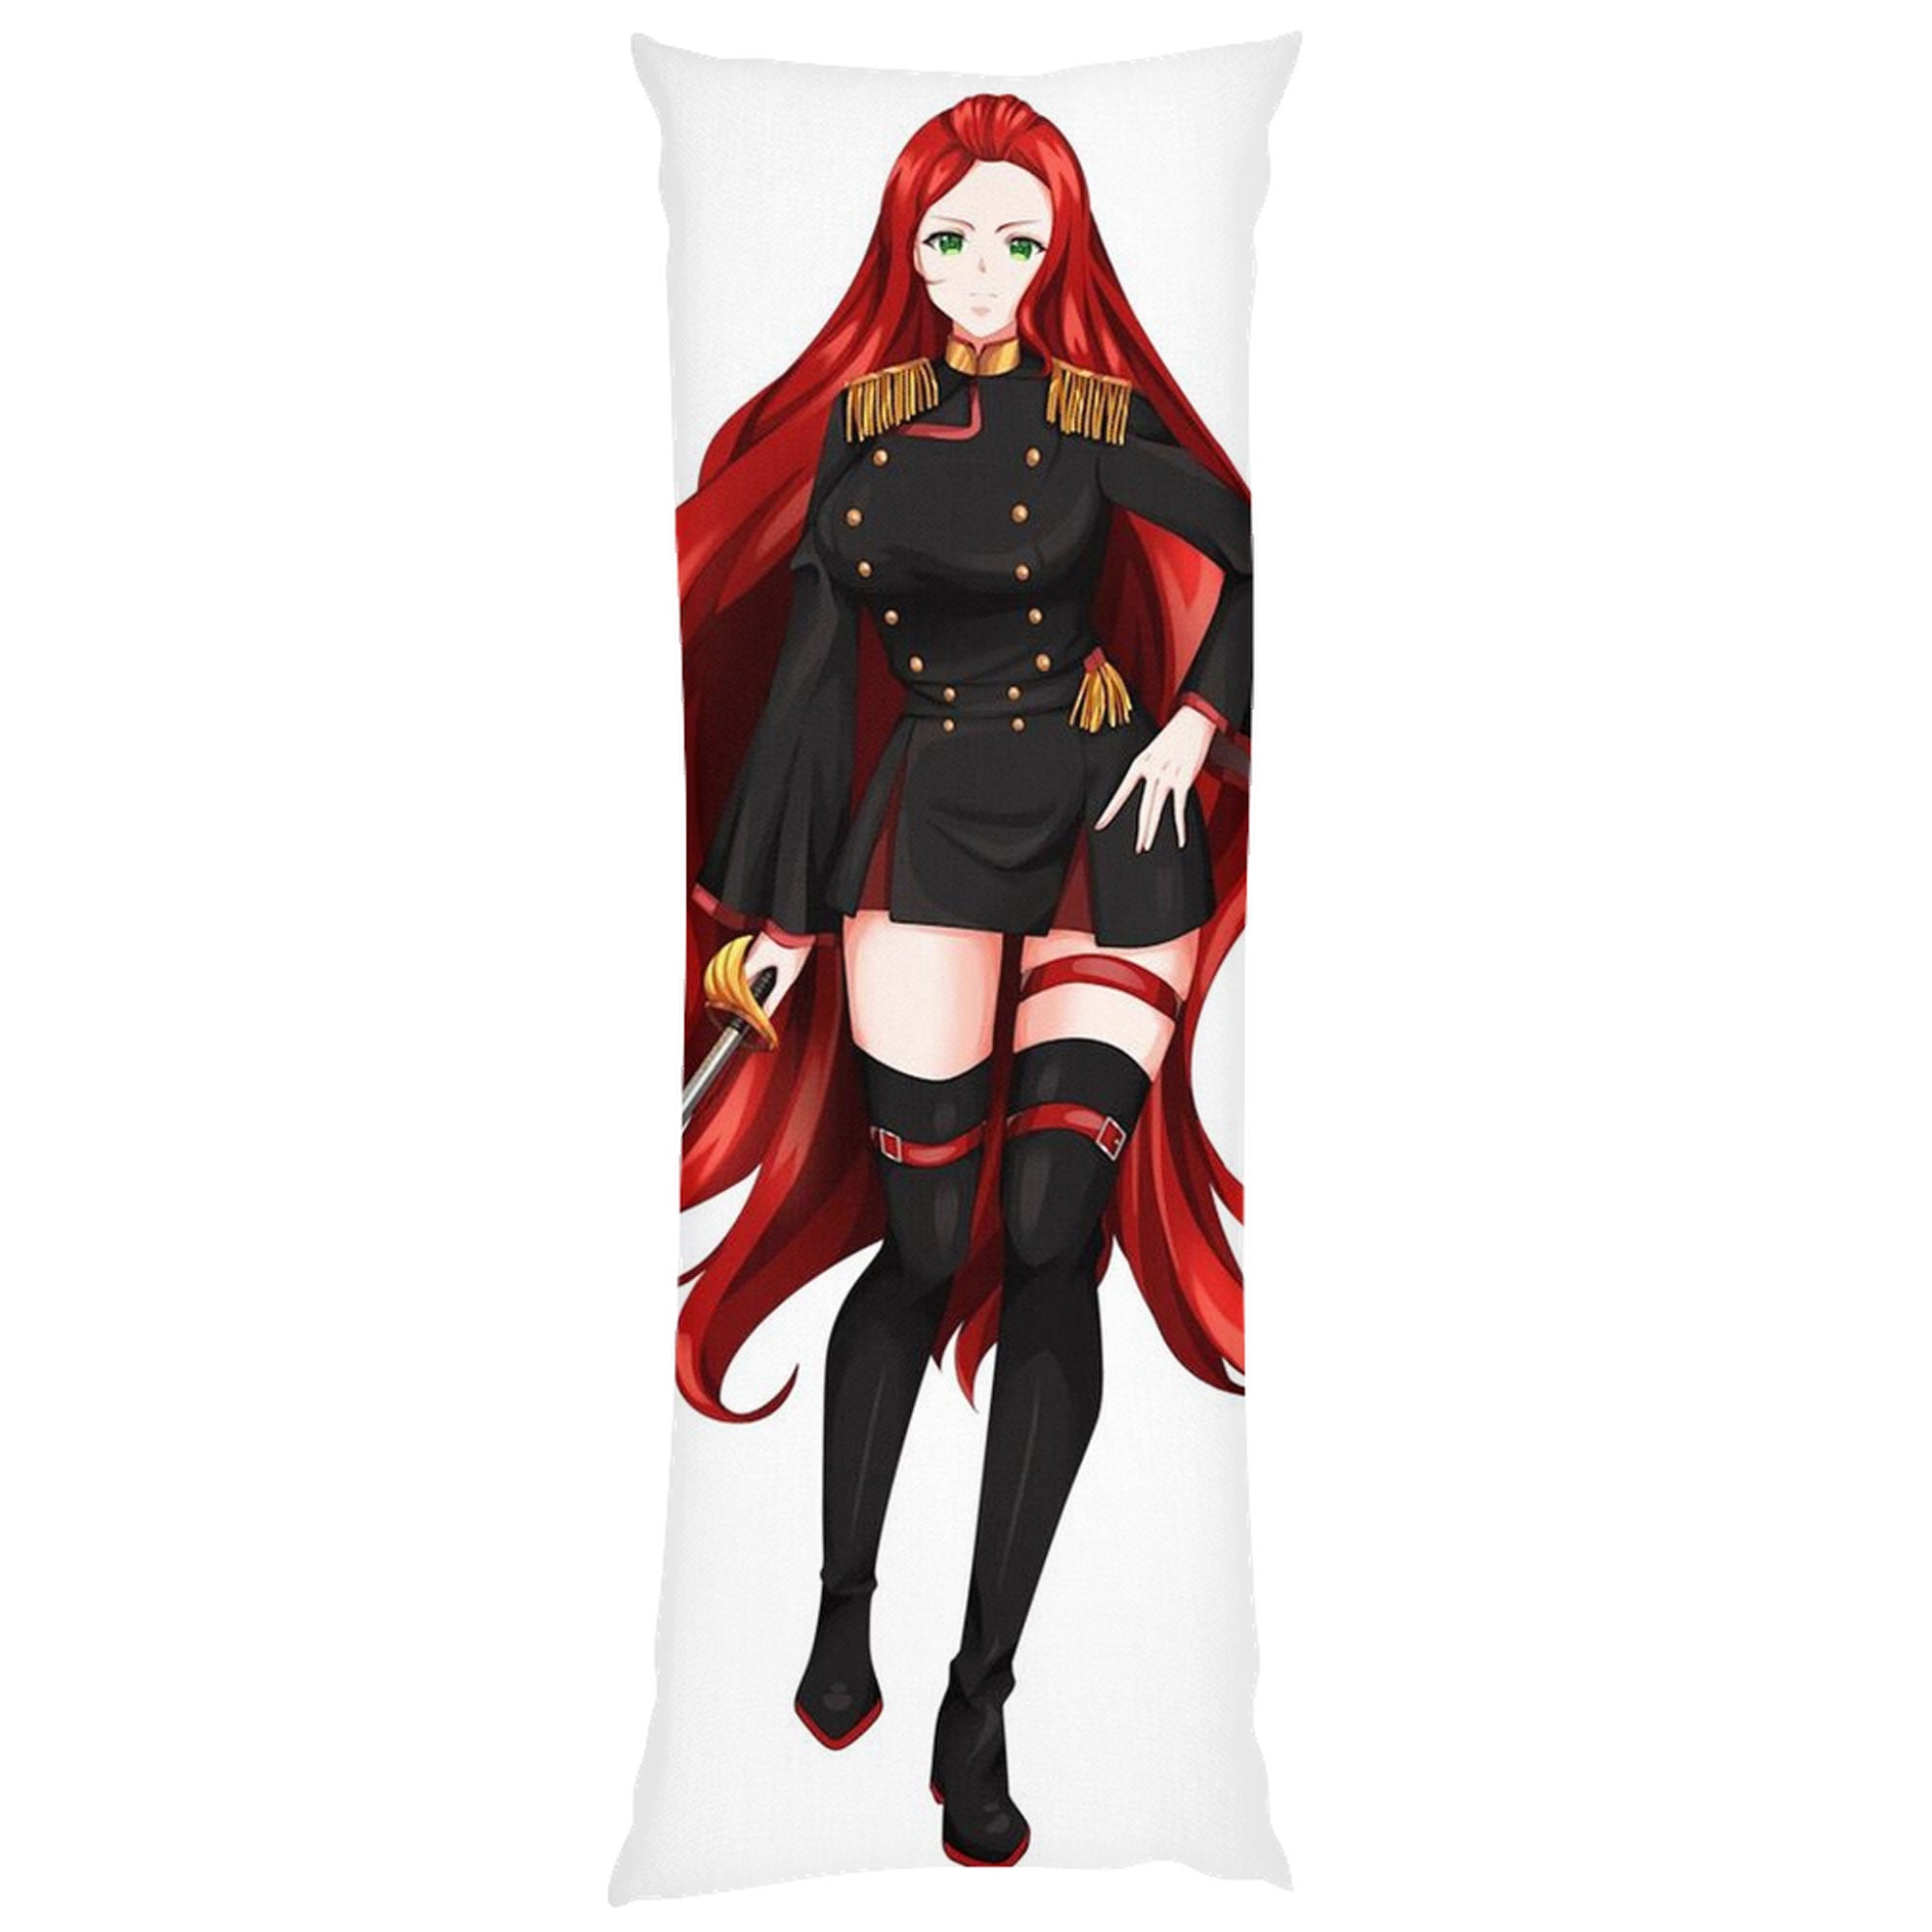 Hero Academy Ice & Fire Boy Training Anime Body Pillow Cover Extra Large  Case - Walmart.com